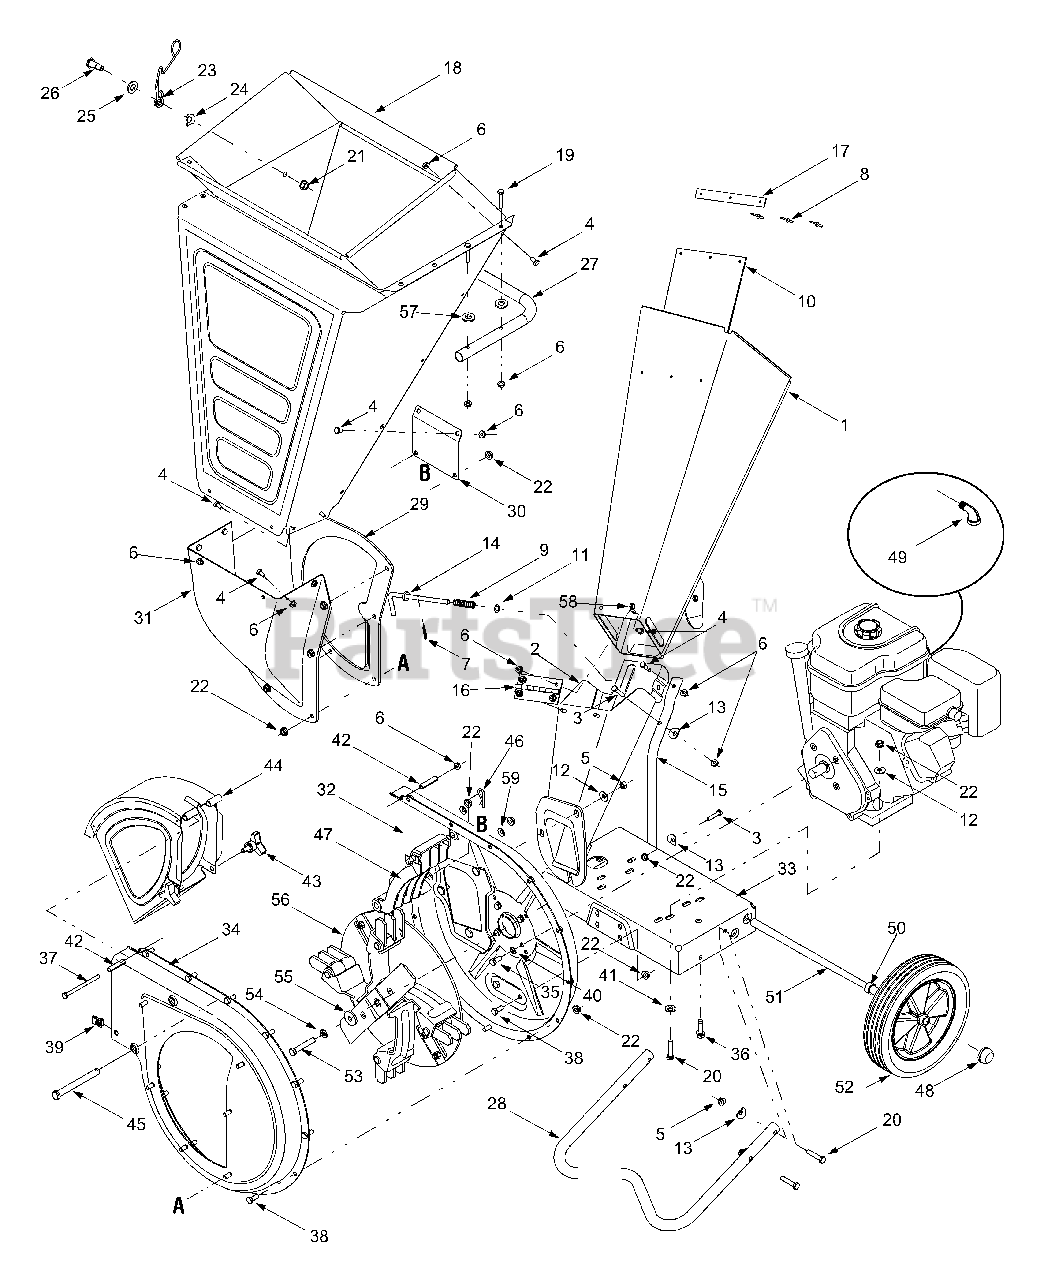 Craftsman  Chipper Shredder  Manual Model # 247.776350 